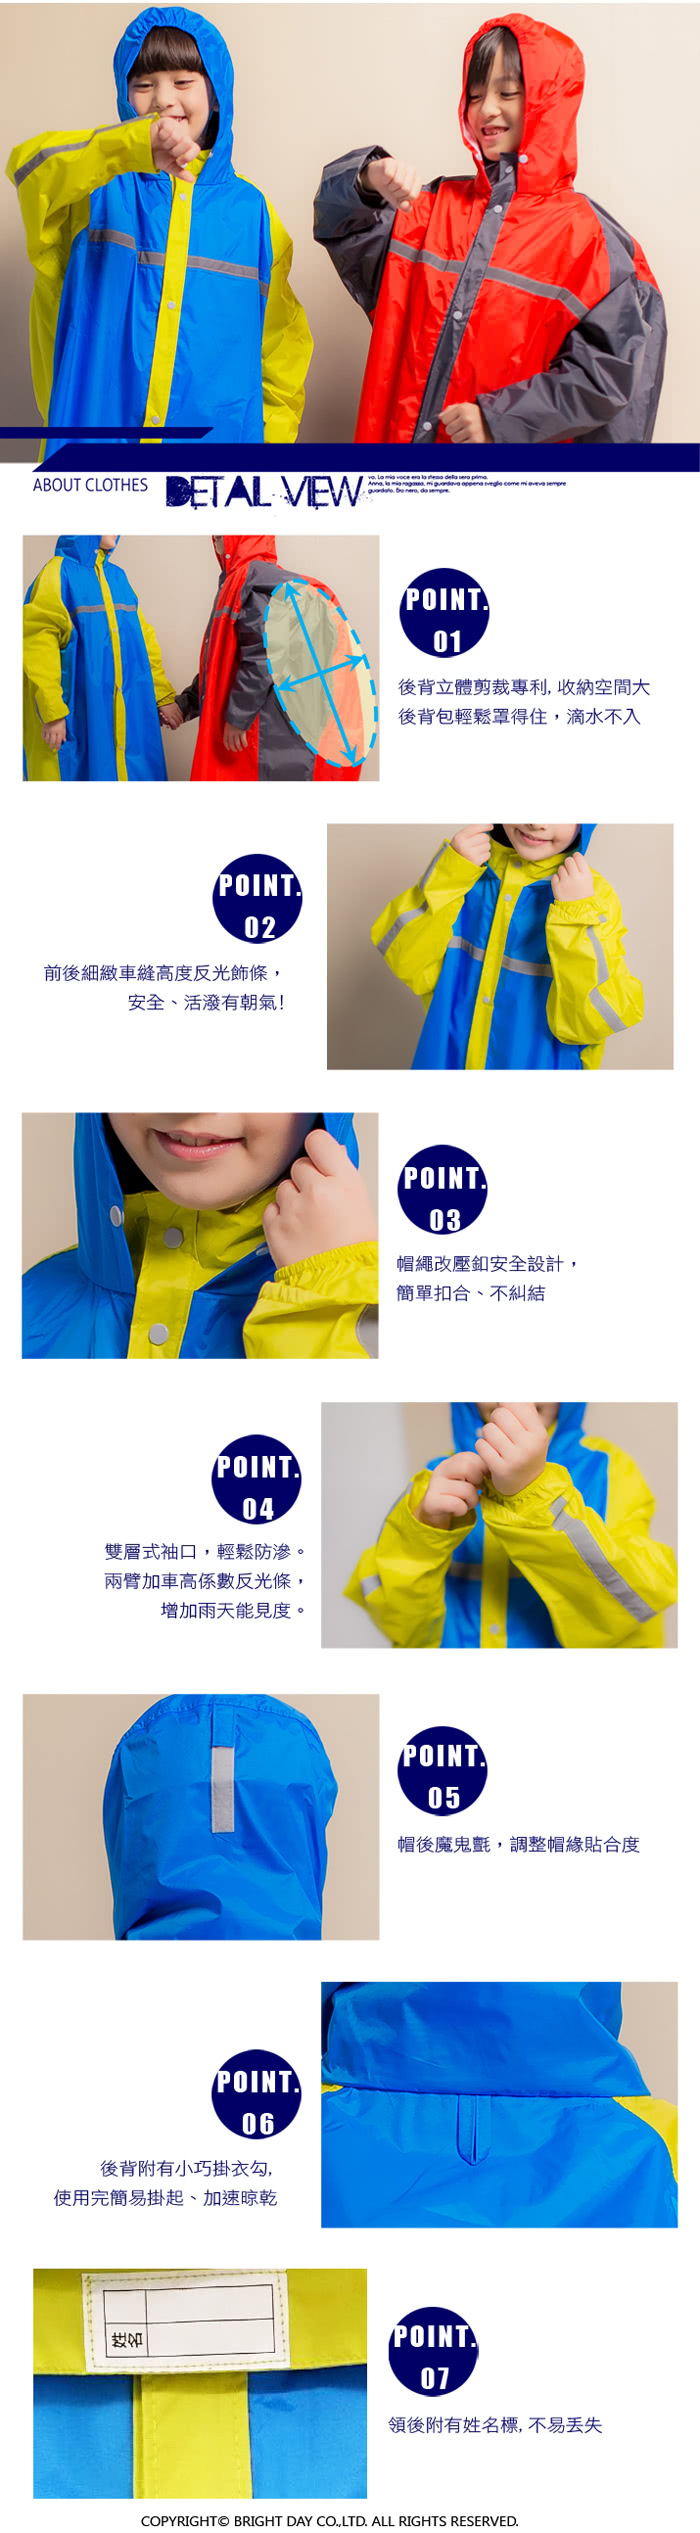 【BrightDay君邁雨衣】藏衫罩背背兒童背包前開連身式風雨衣(機車雨衣、戶外雨衣)